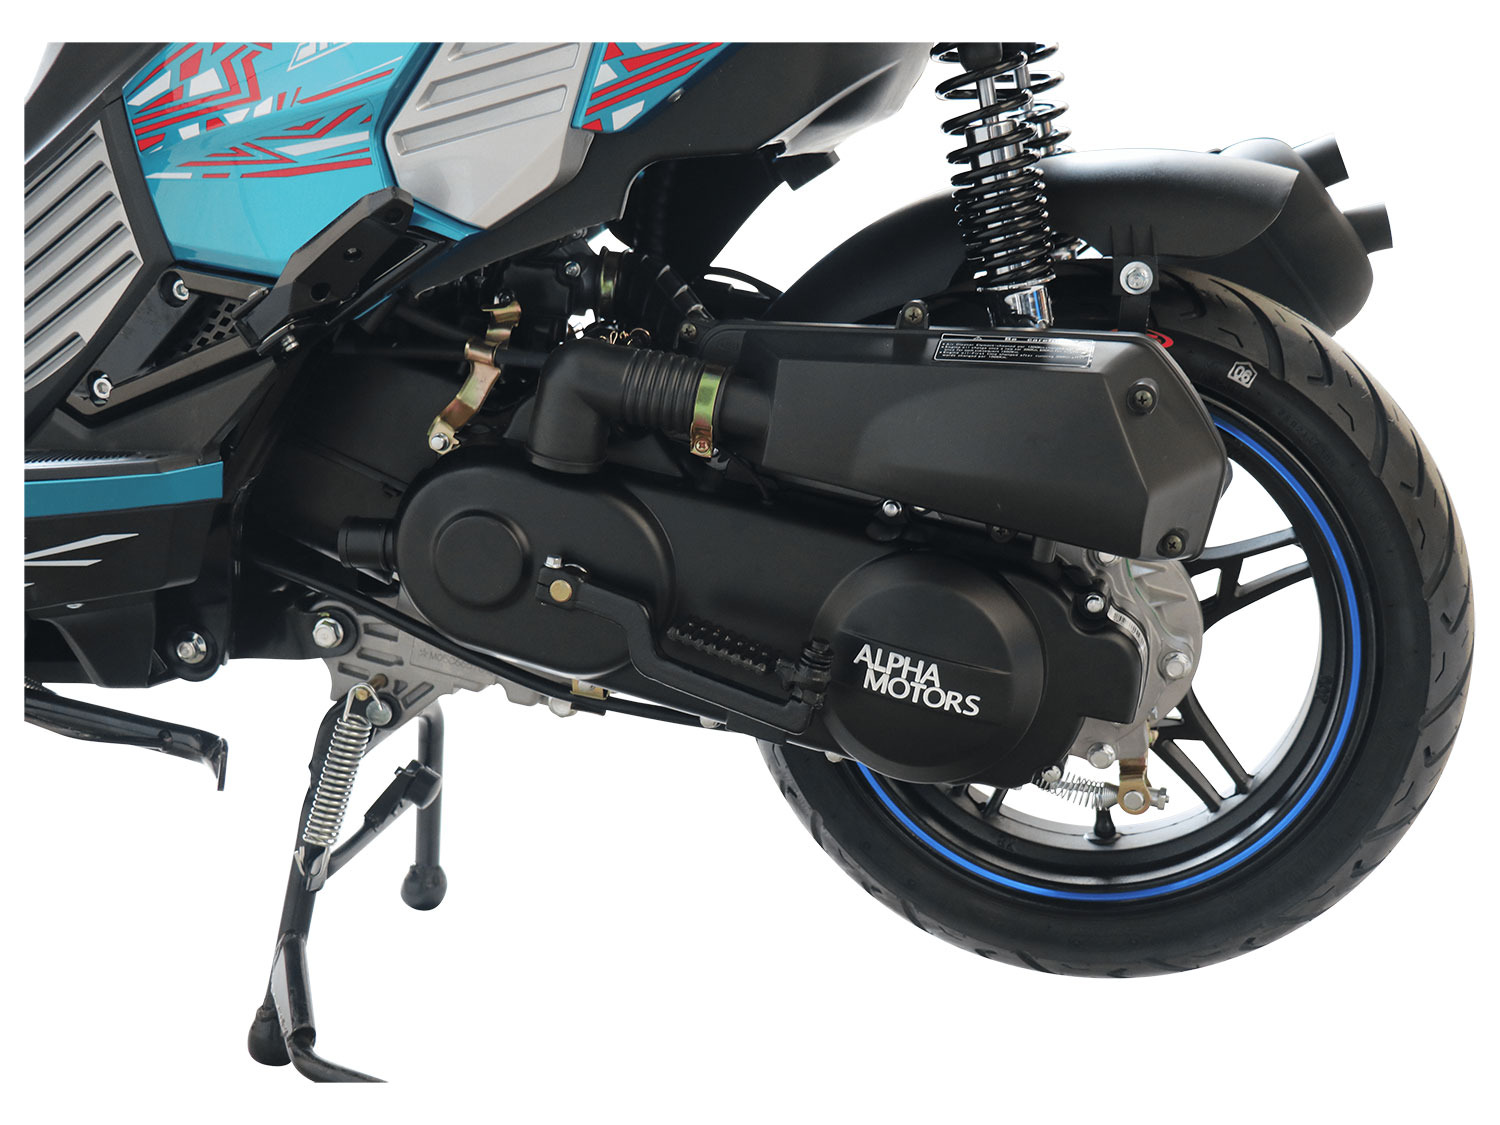 EURO Shark 45 Alpha km/h 50ccm 5 Motors Motorroller